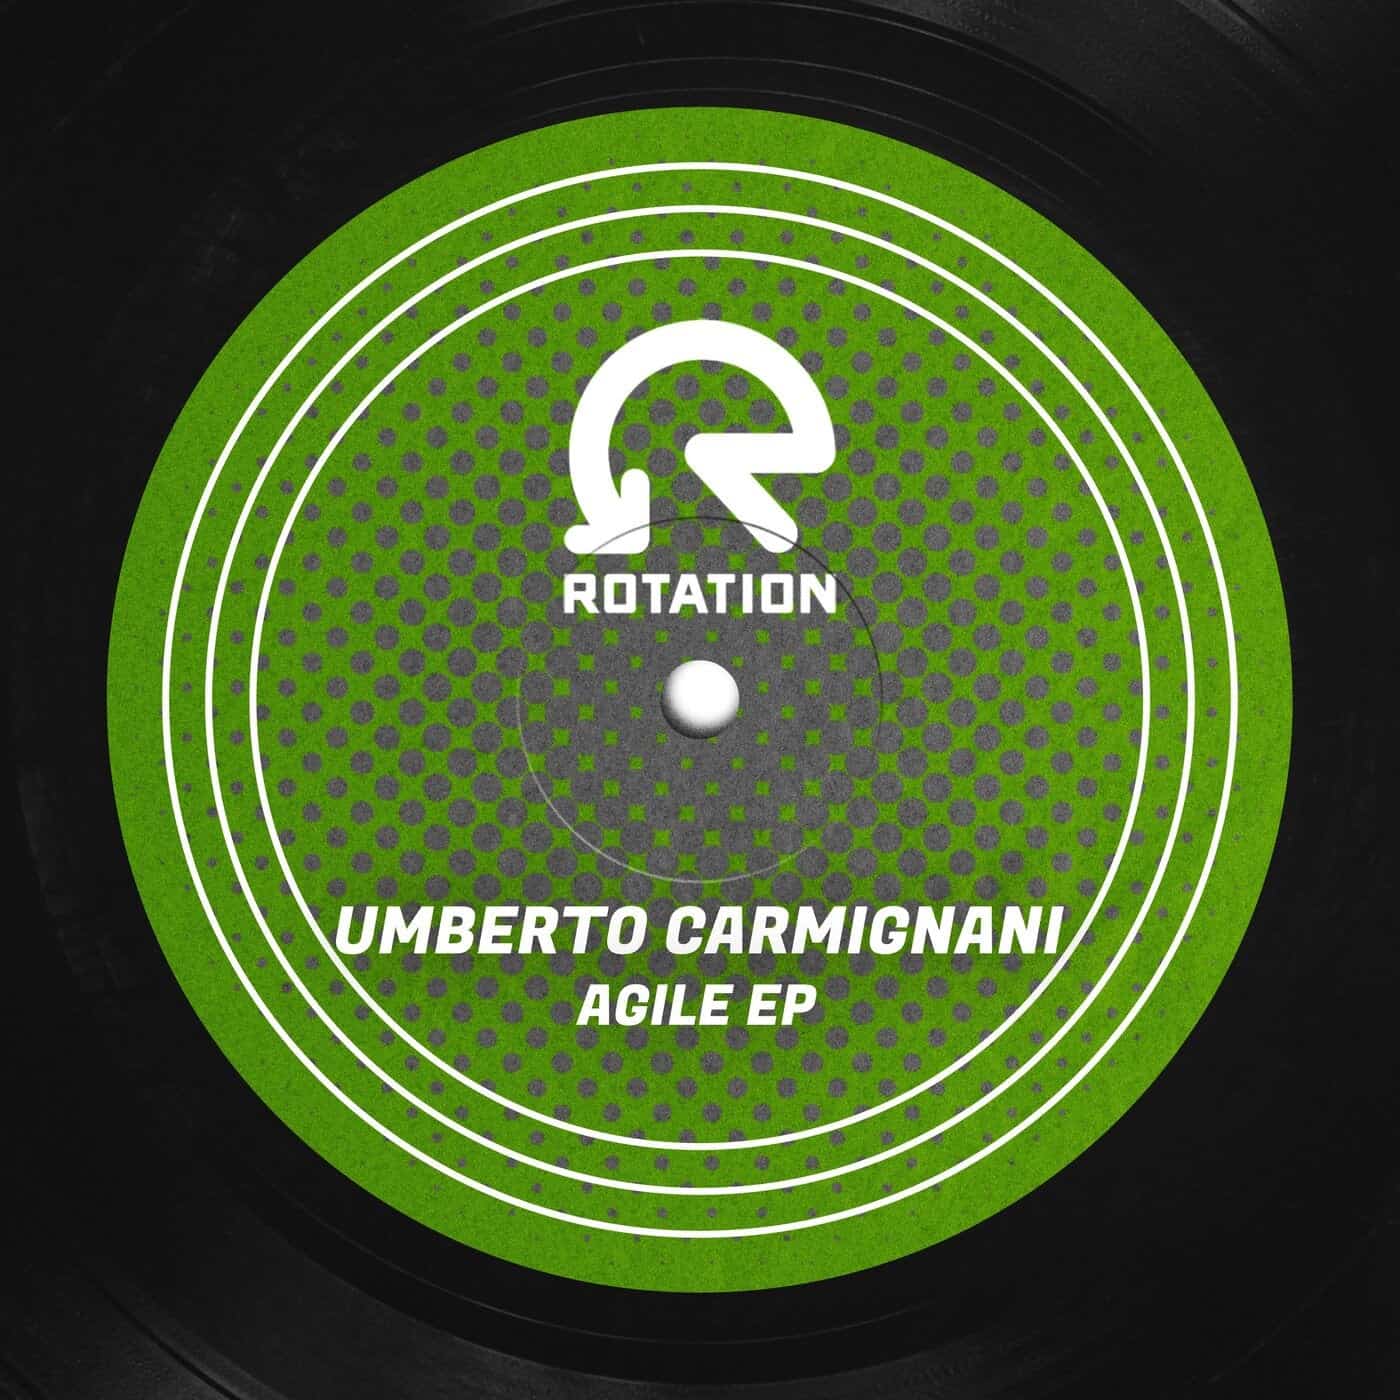 Download Umberto Carmignani - Agile EP on Electrobuzz